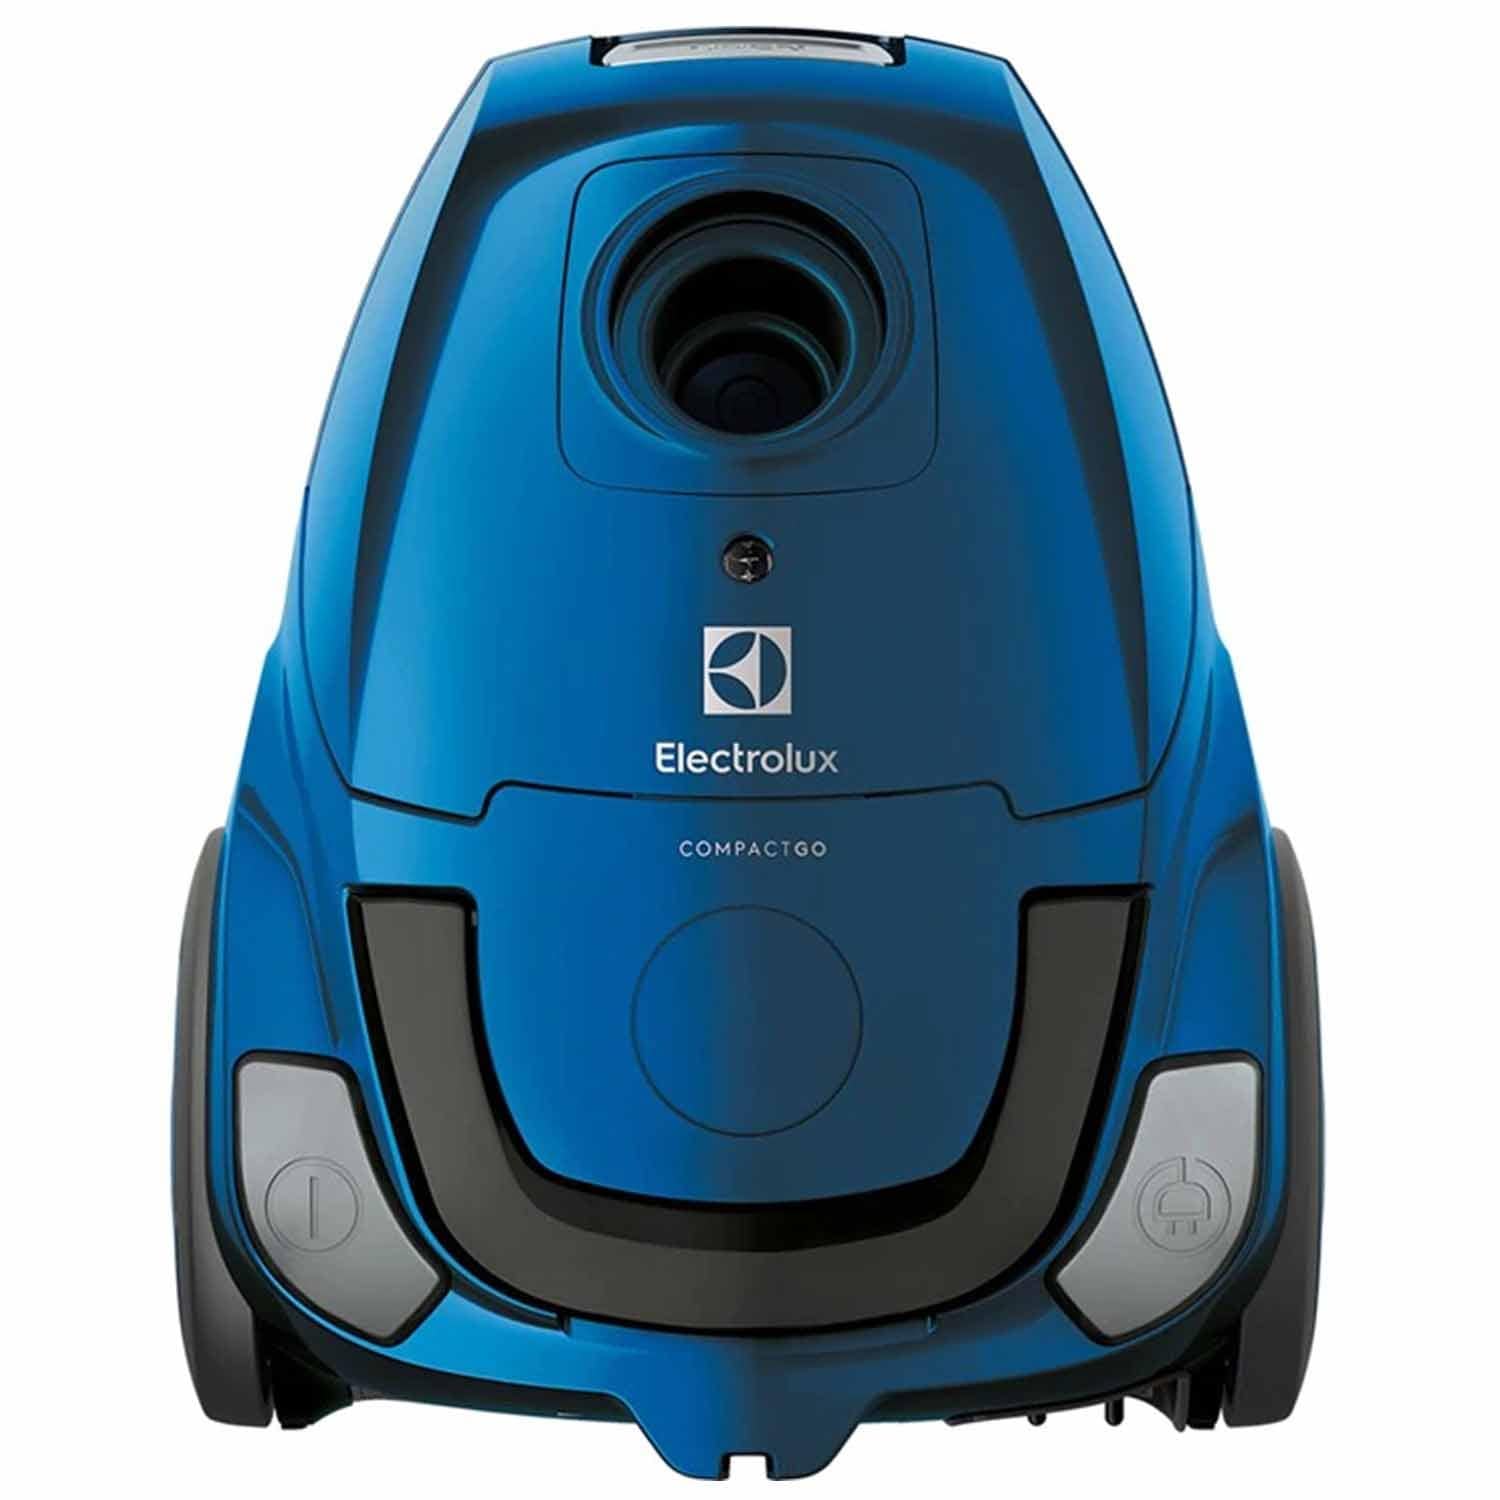 Electrolux CompactGo Bagged Vacuum Cleaner